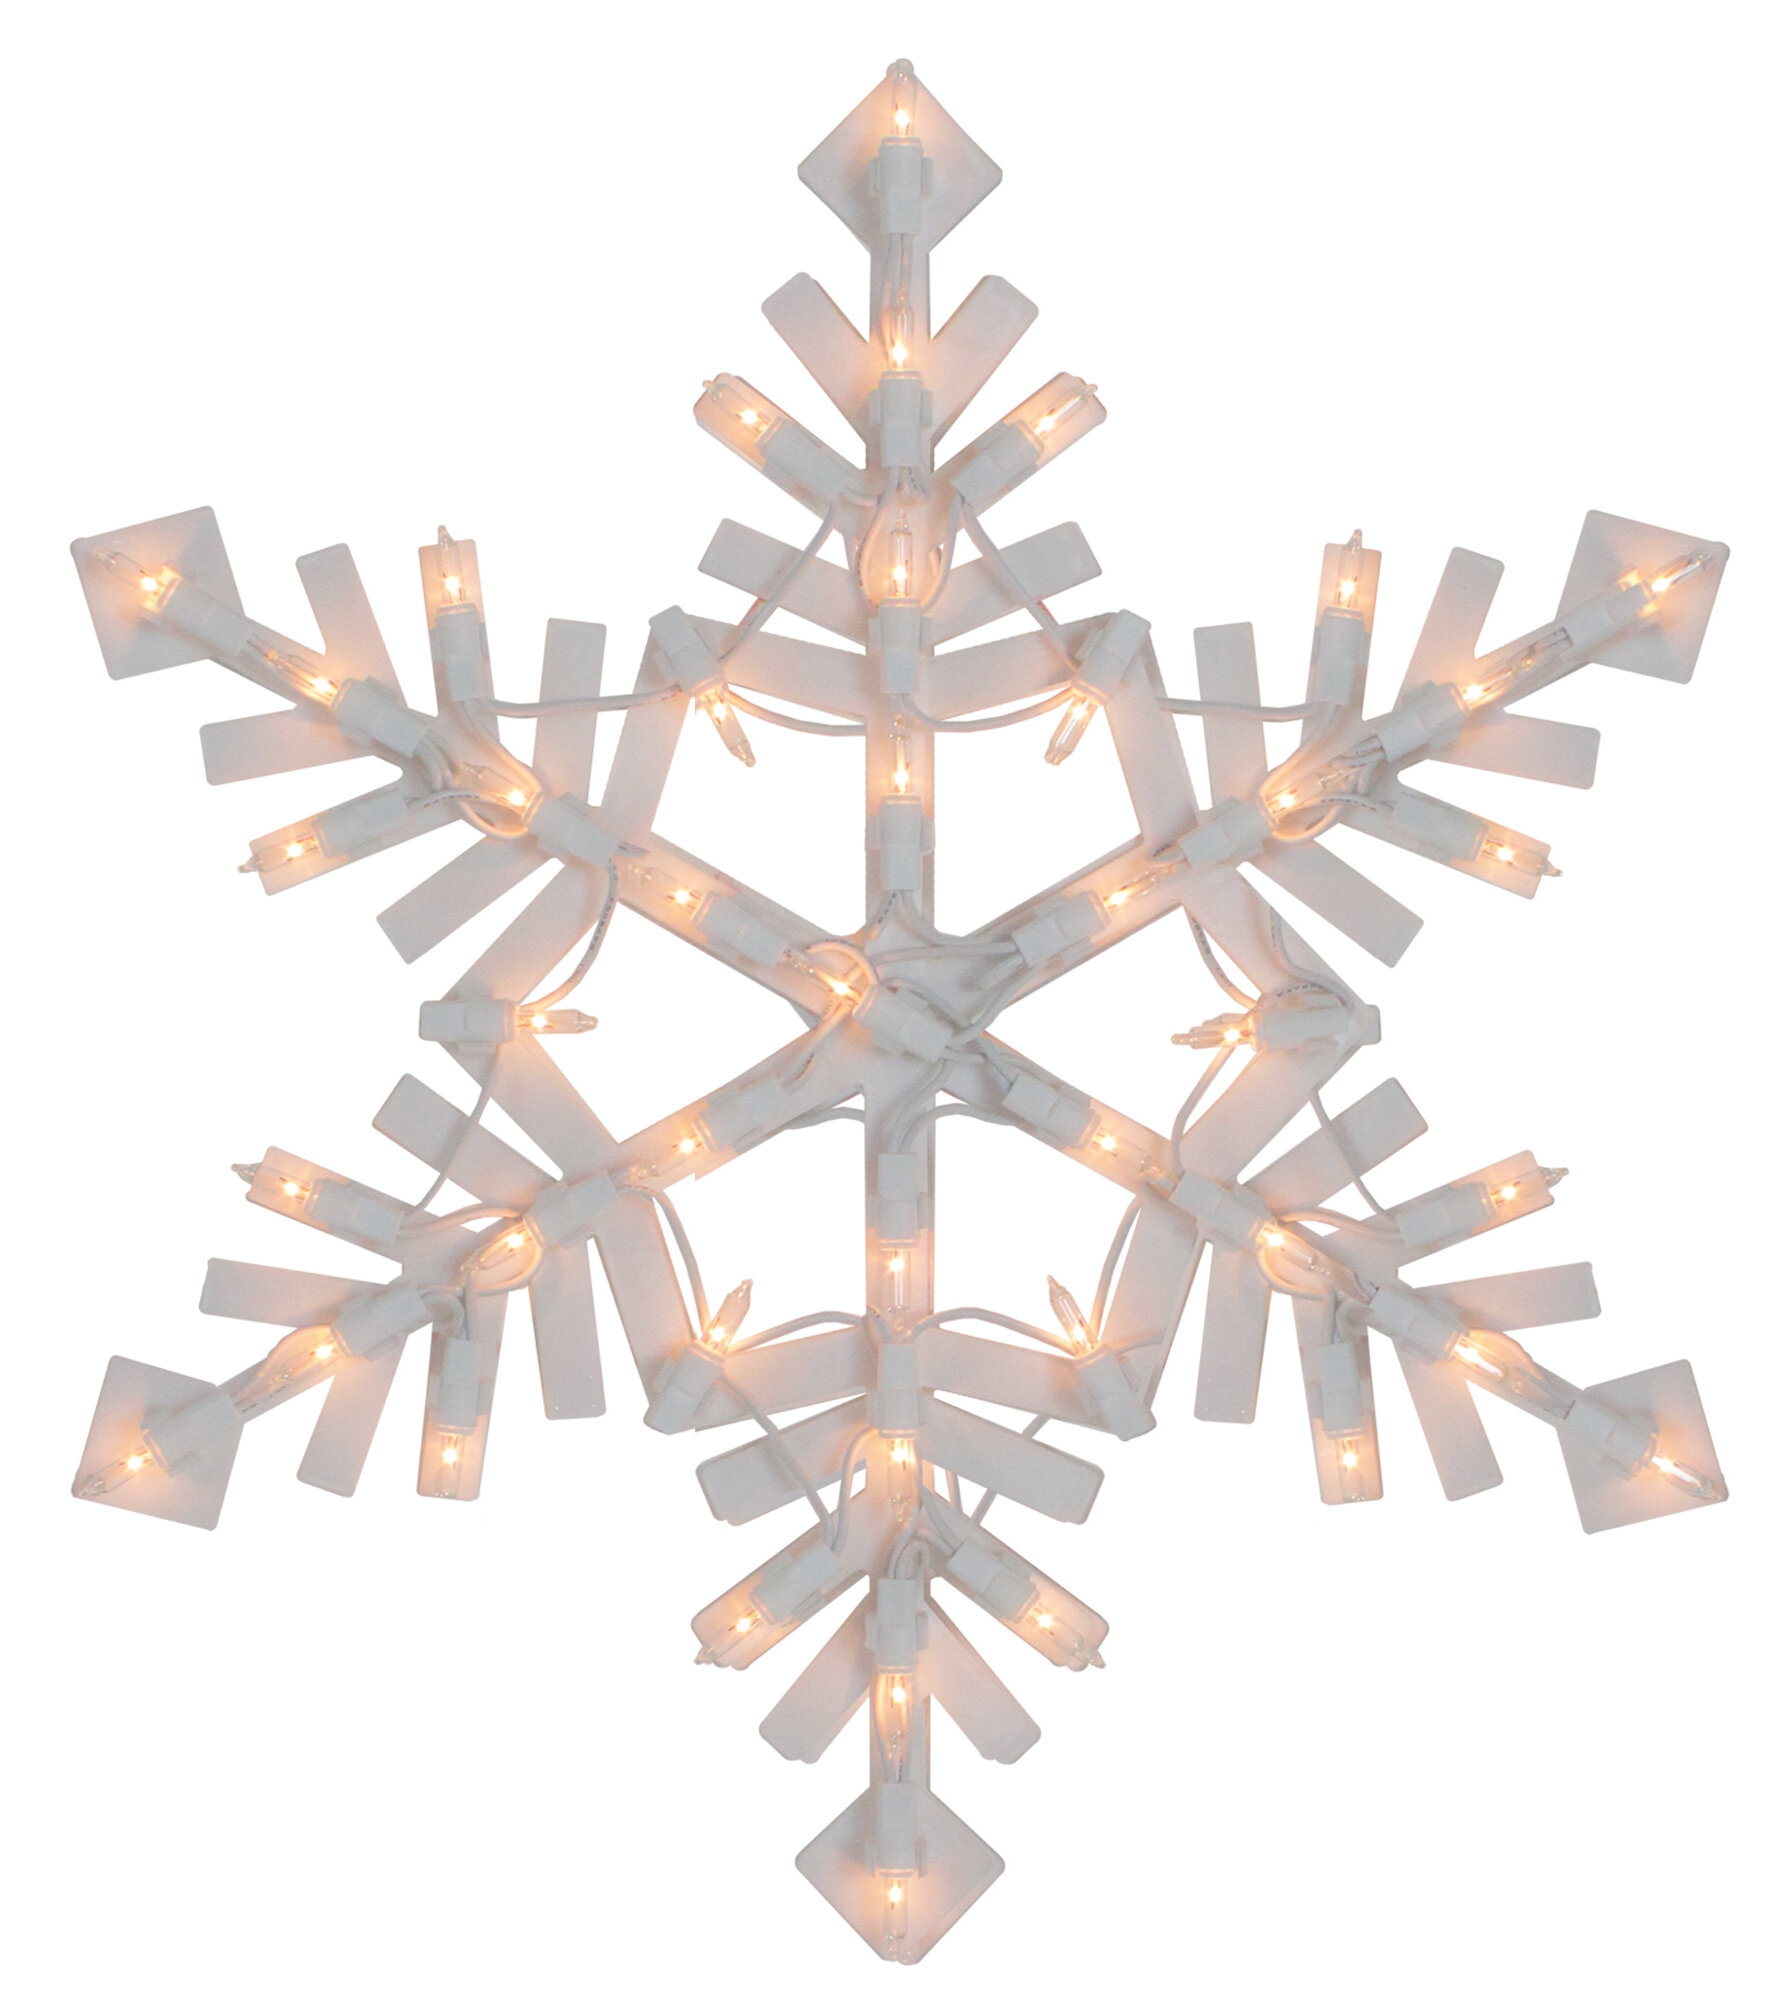 The Holiday Aisle Snowflake 43 Light Lighted Window Decor